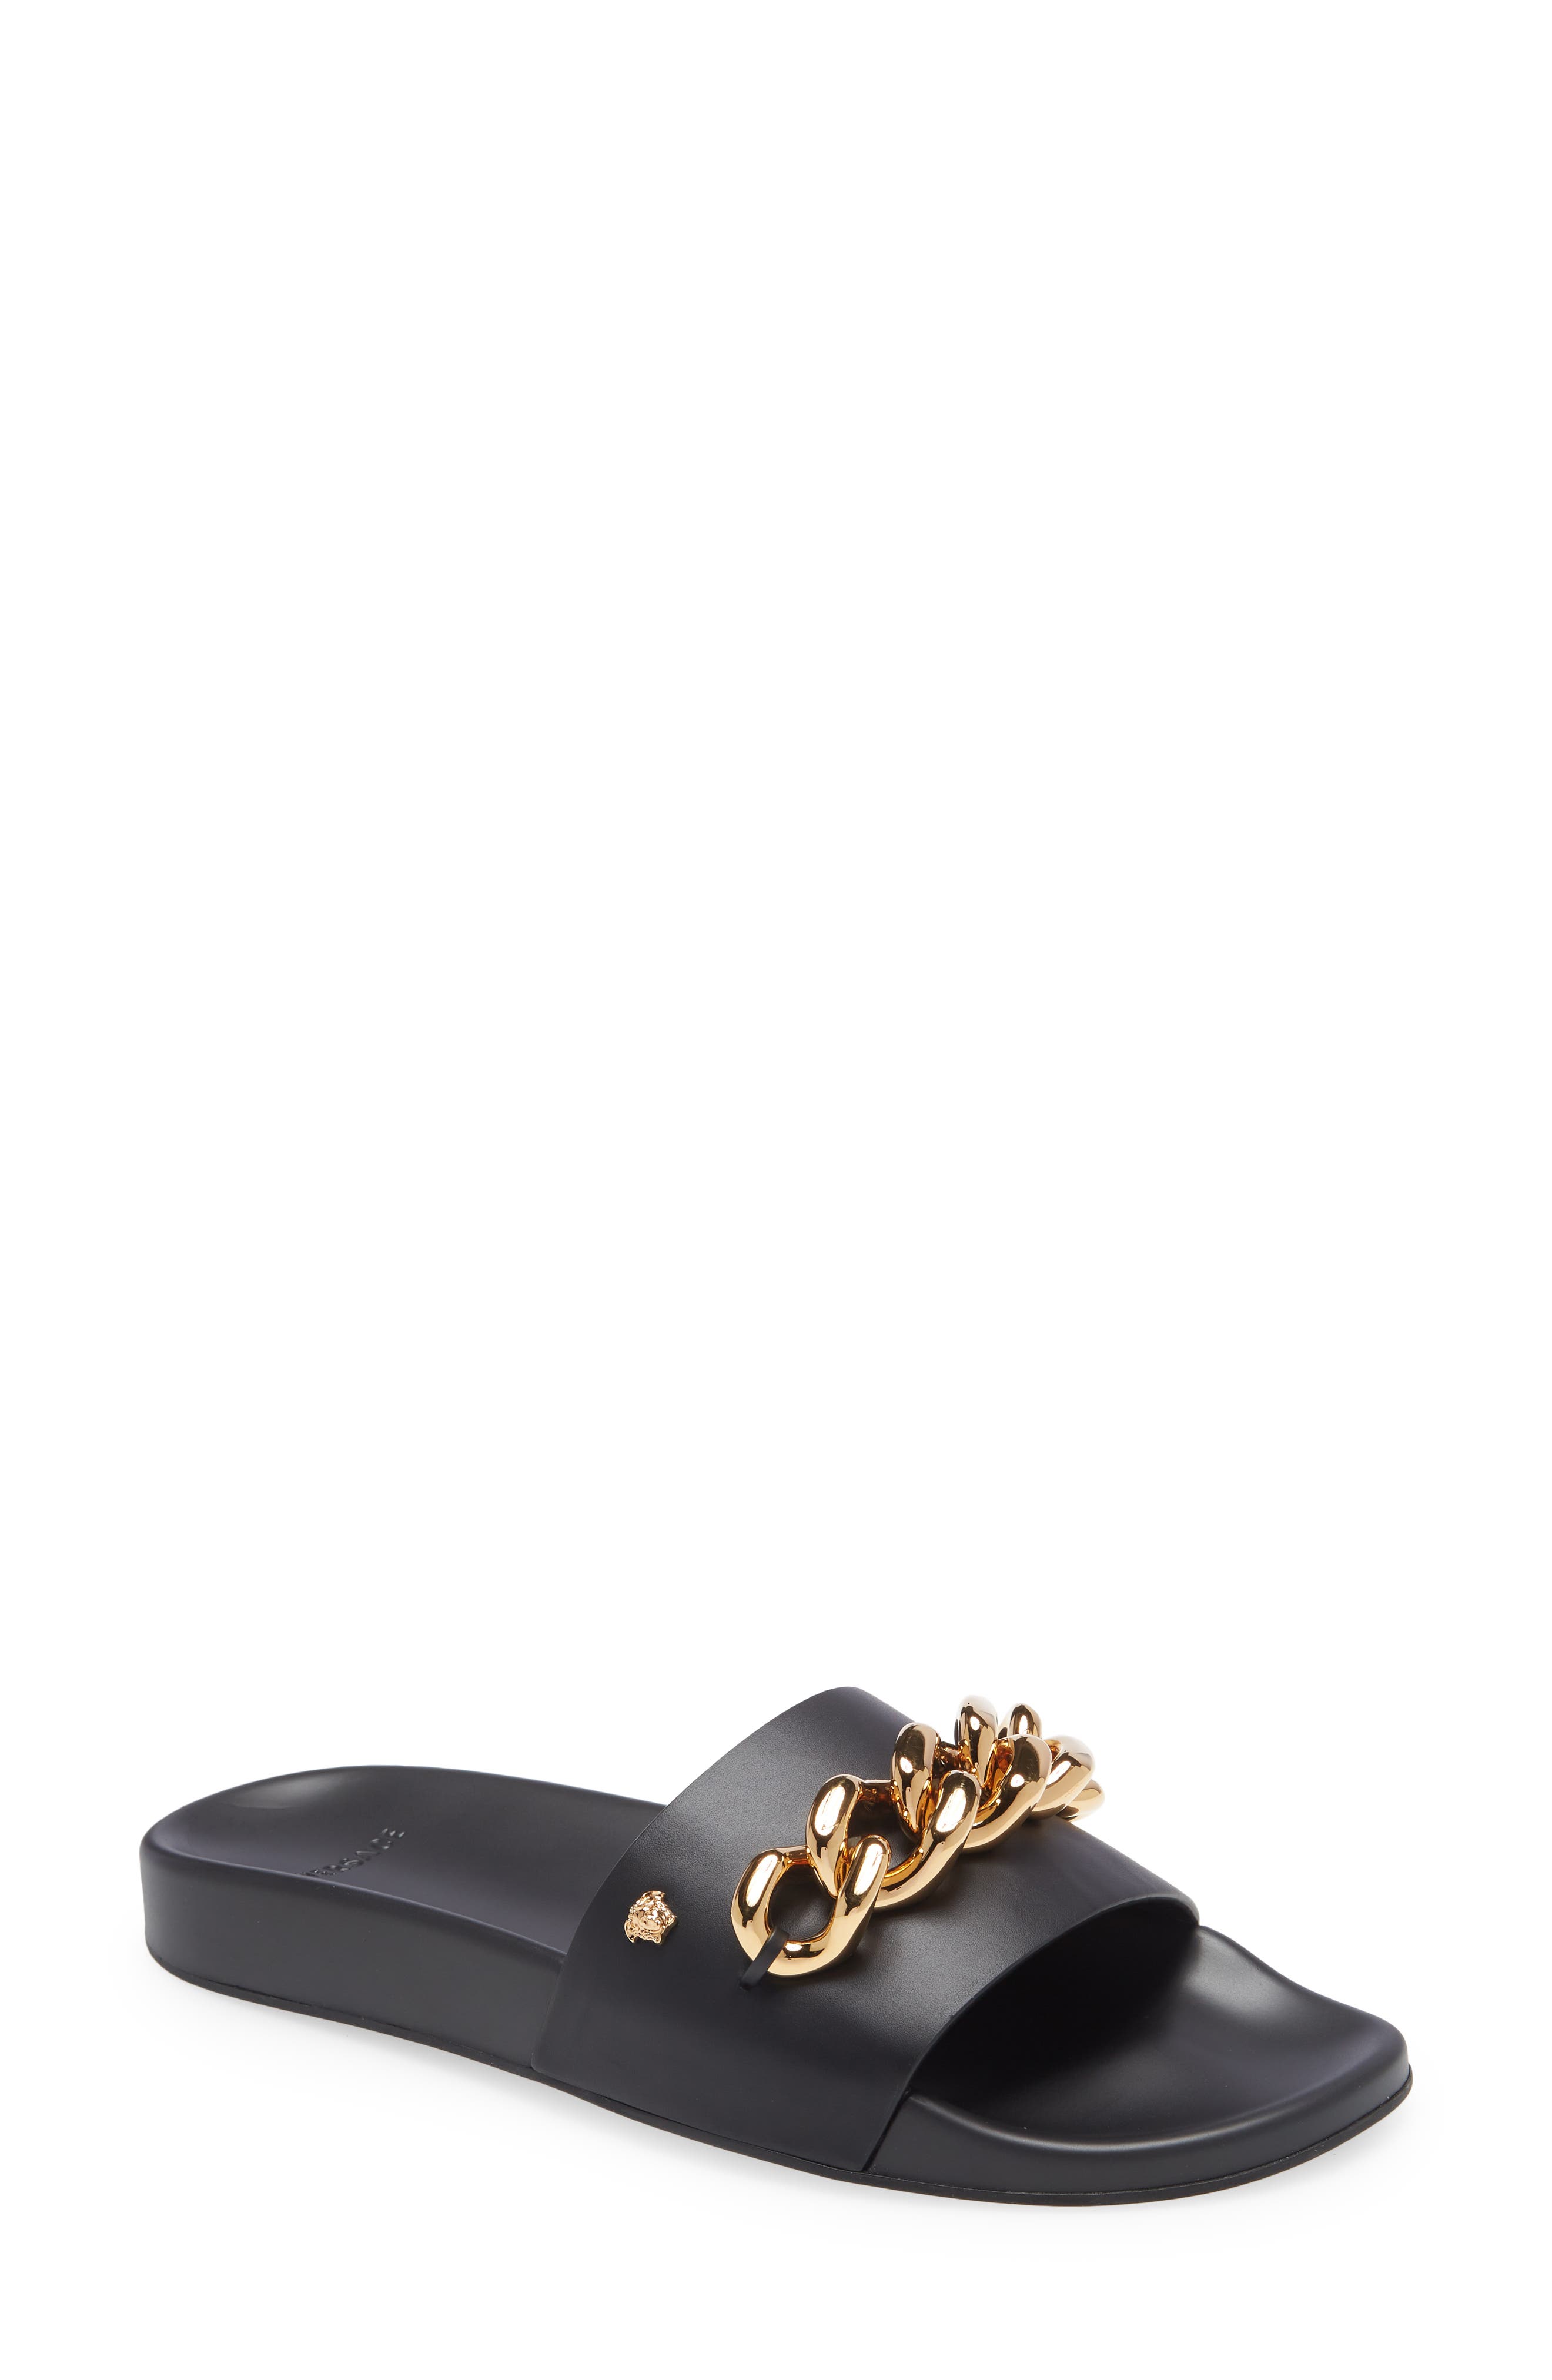 Versace Medusa Chain Slide Sandal in Black-Versace Gold at Nordstrom, Size 5Us